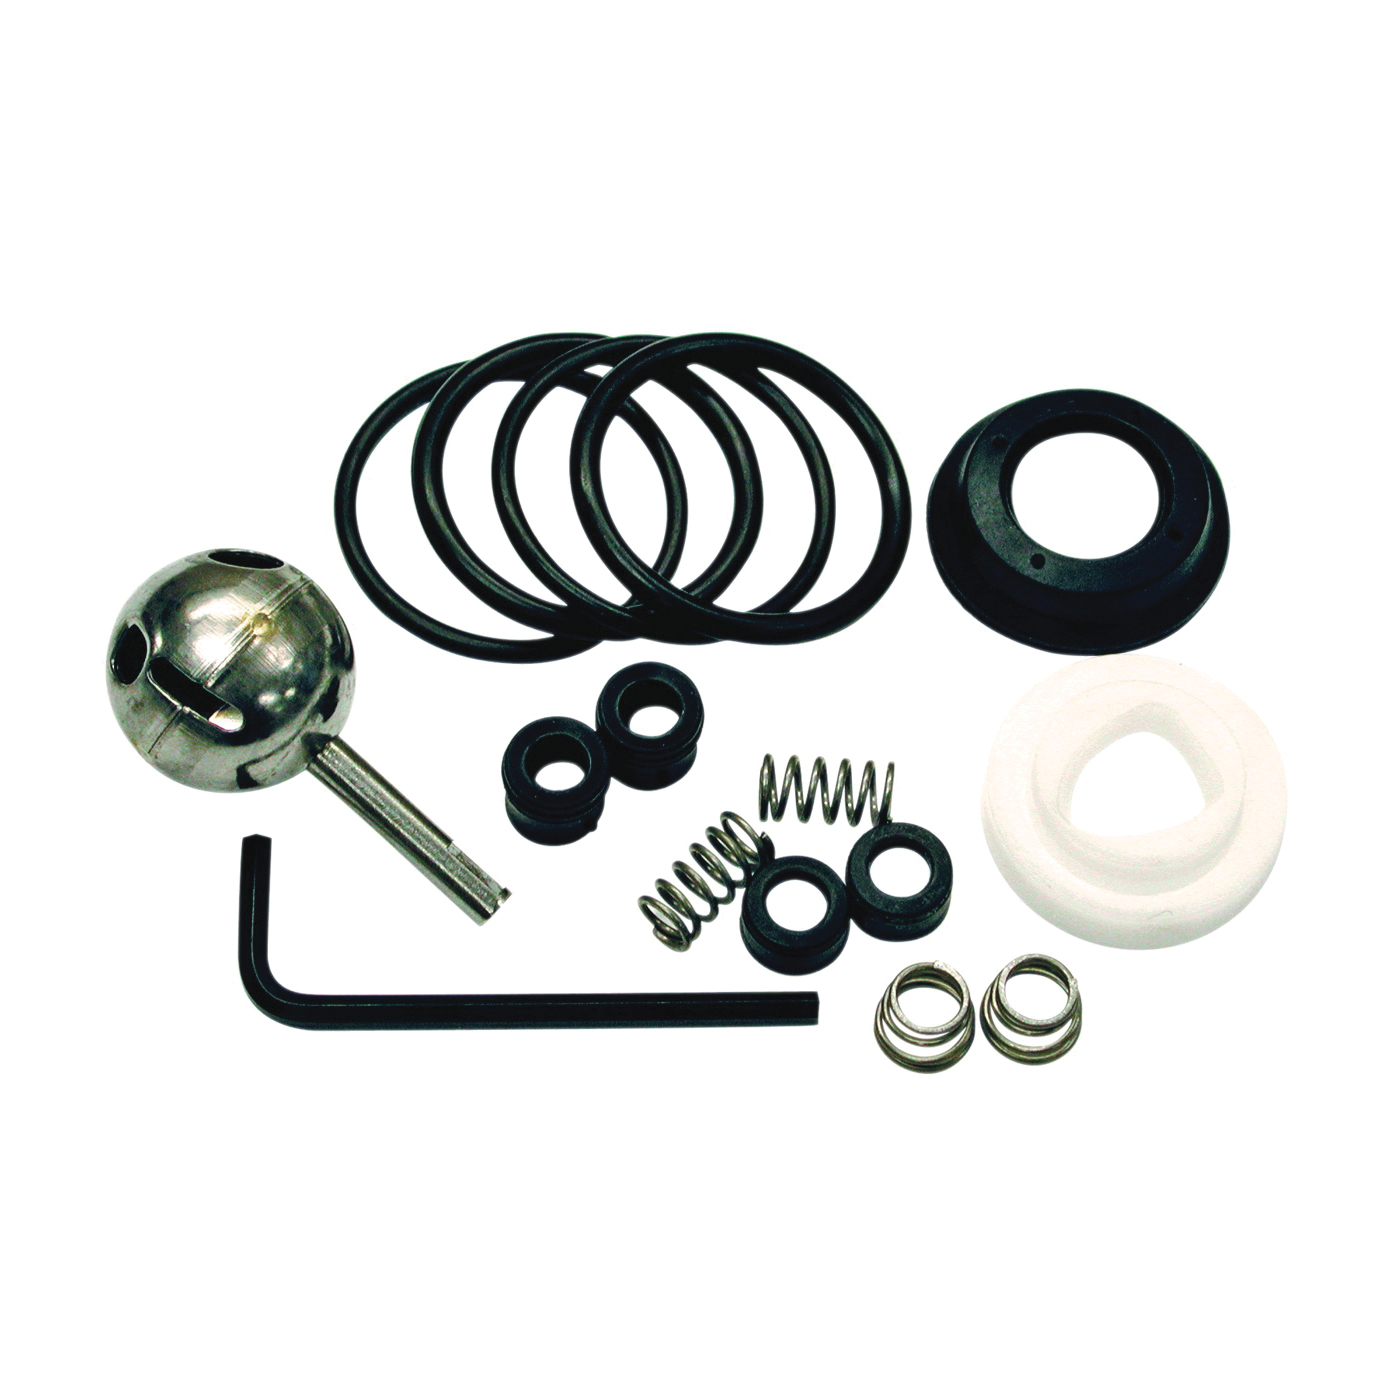 86970 Cartridge Repair Kit, Brass/Plastic/Rubber/Steel, For: Delta Single Handle Faucets